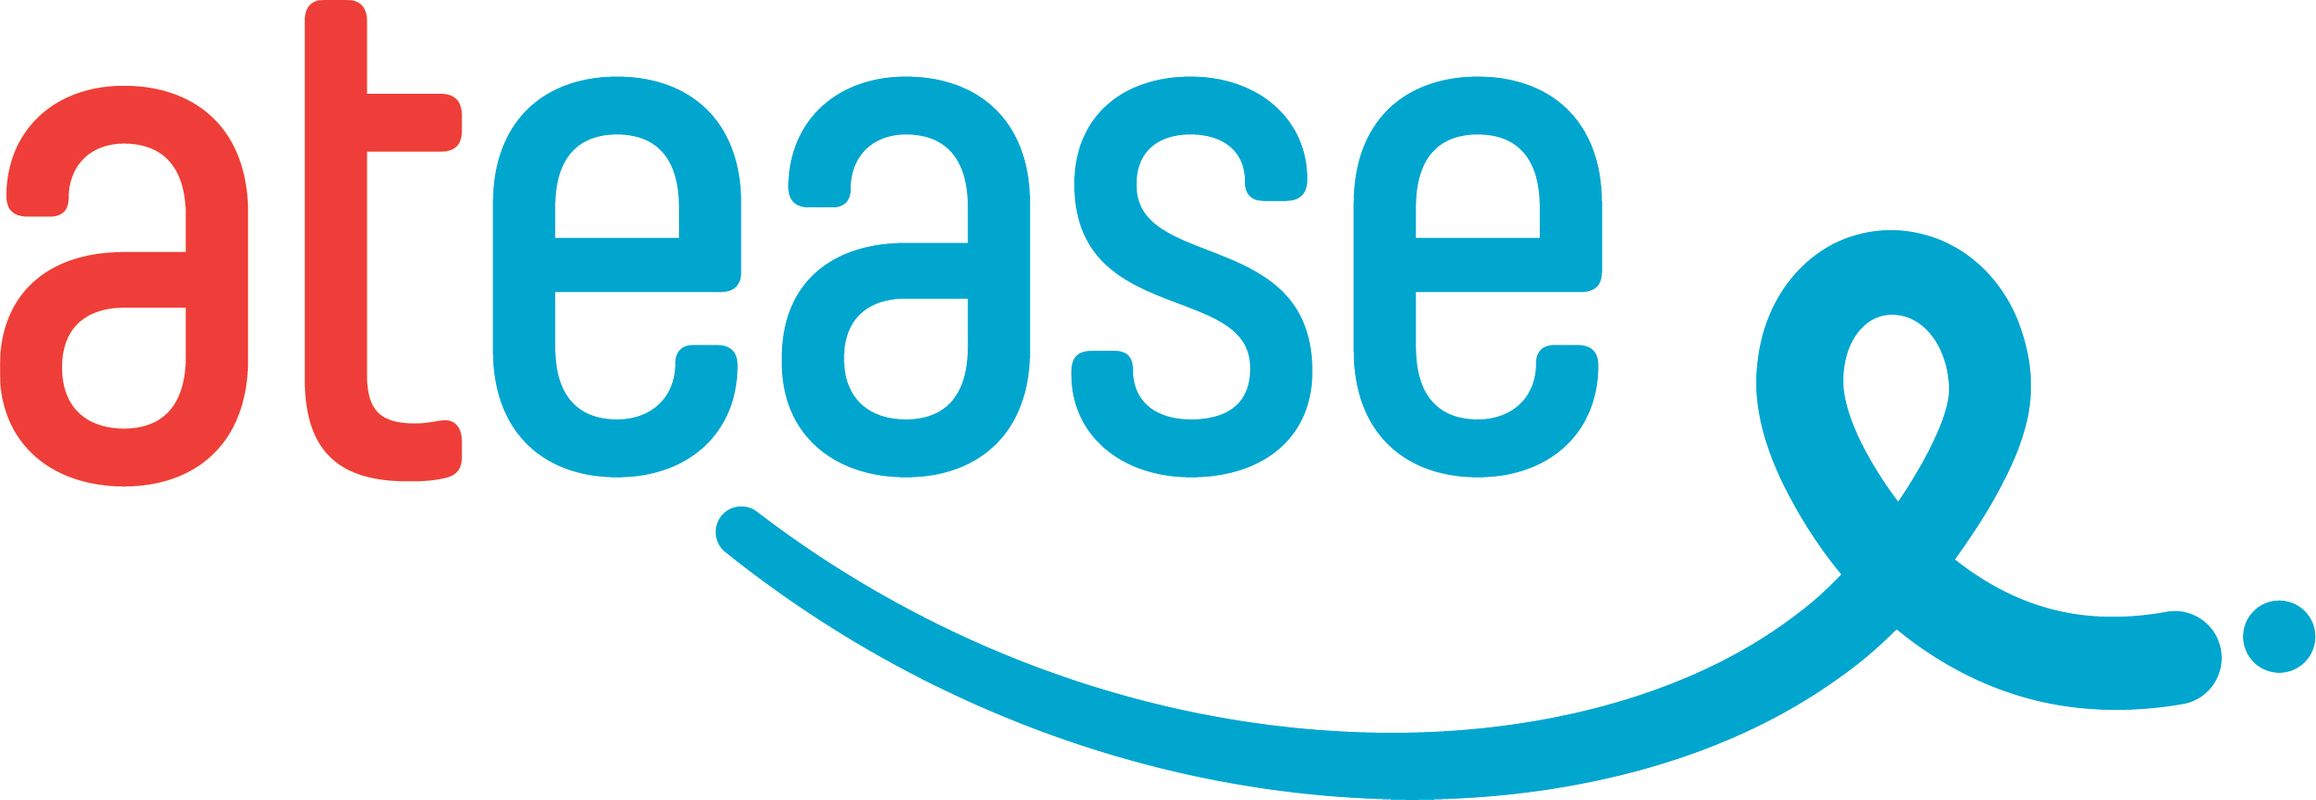 at-ease-logo-Color-FIN.jpg